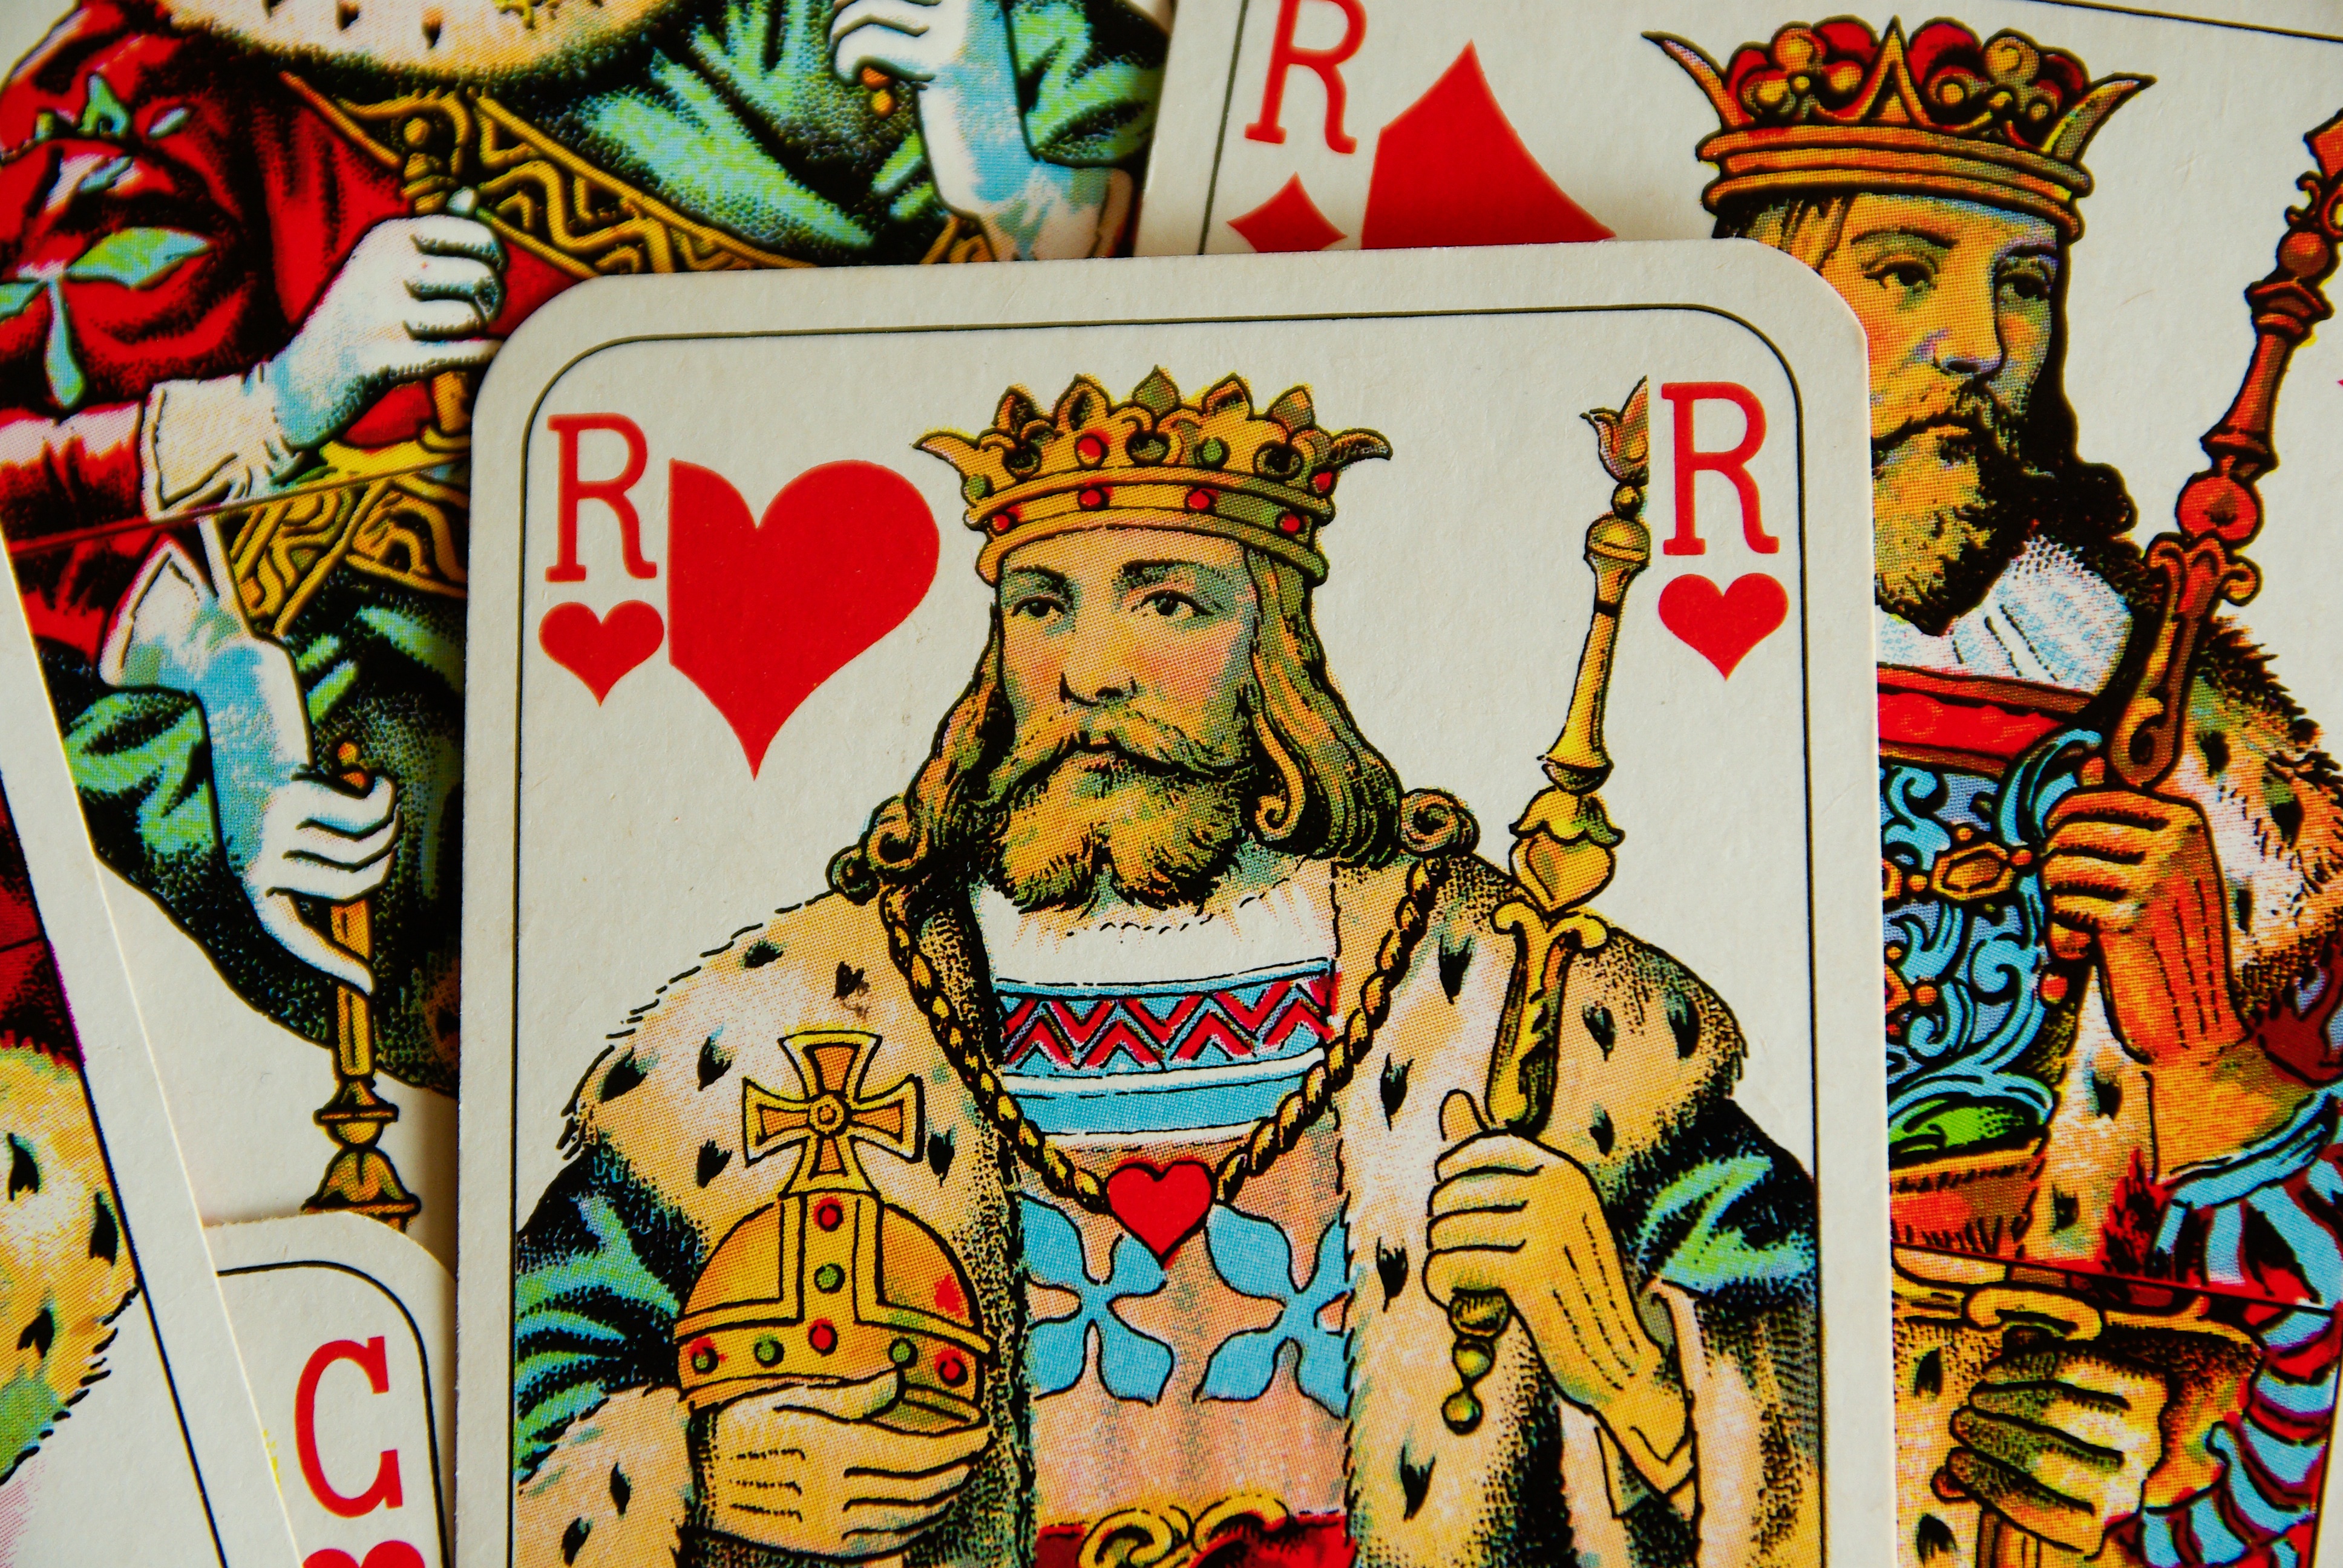 Kingcards